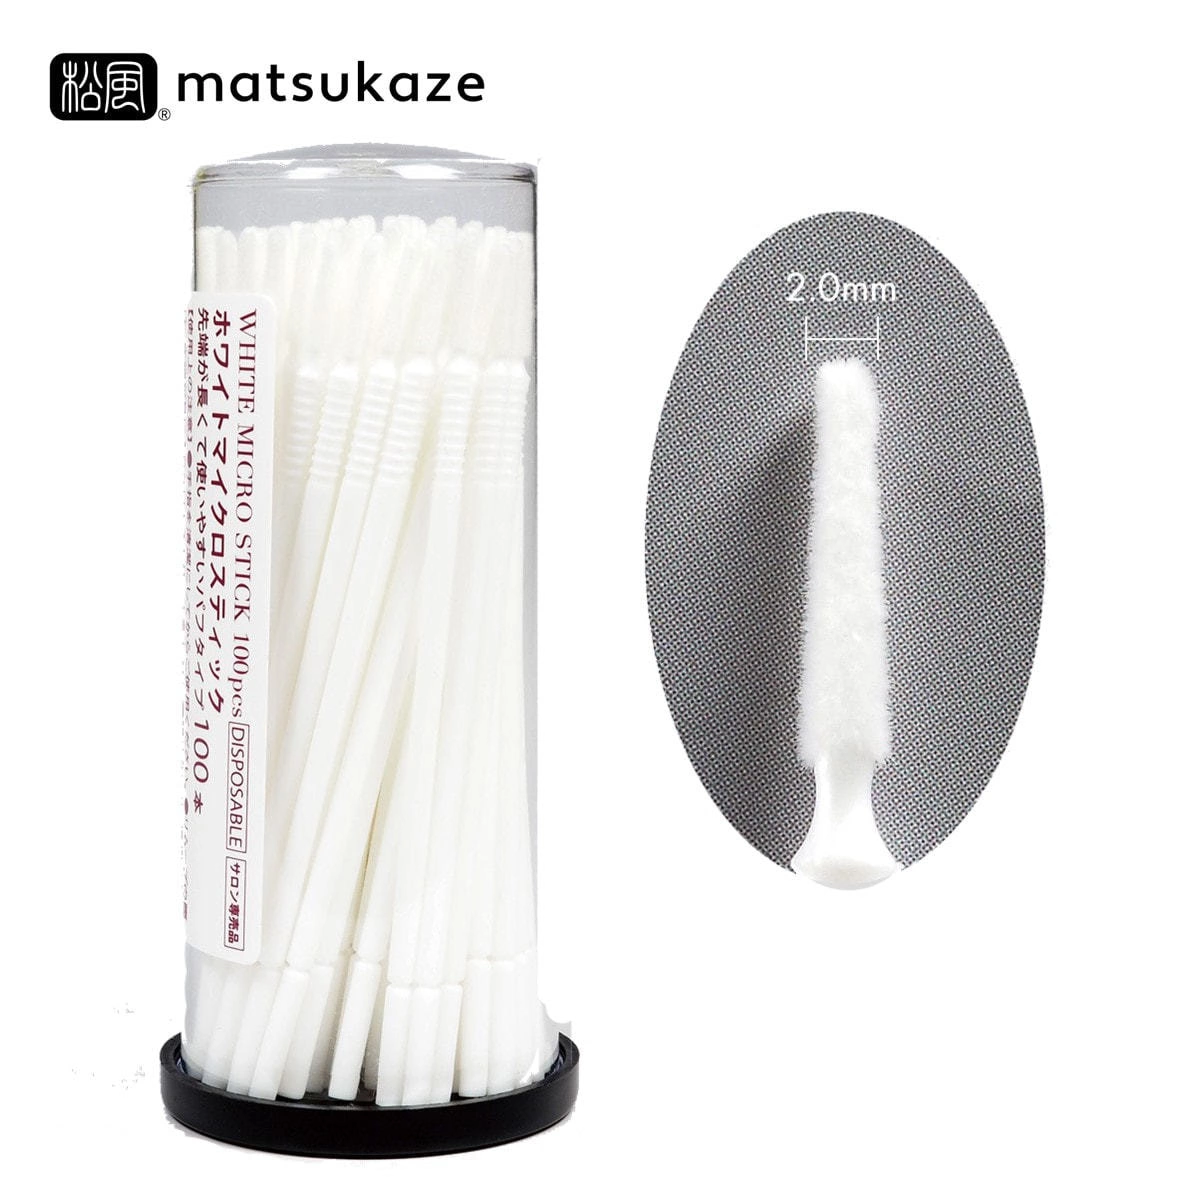 【matsukaze】White Micro Stick [Long tip type] 100 sticks